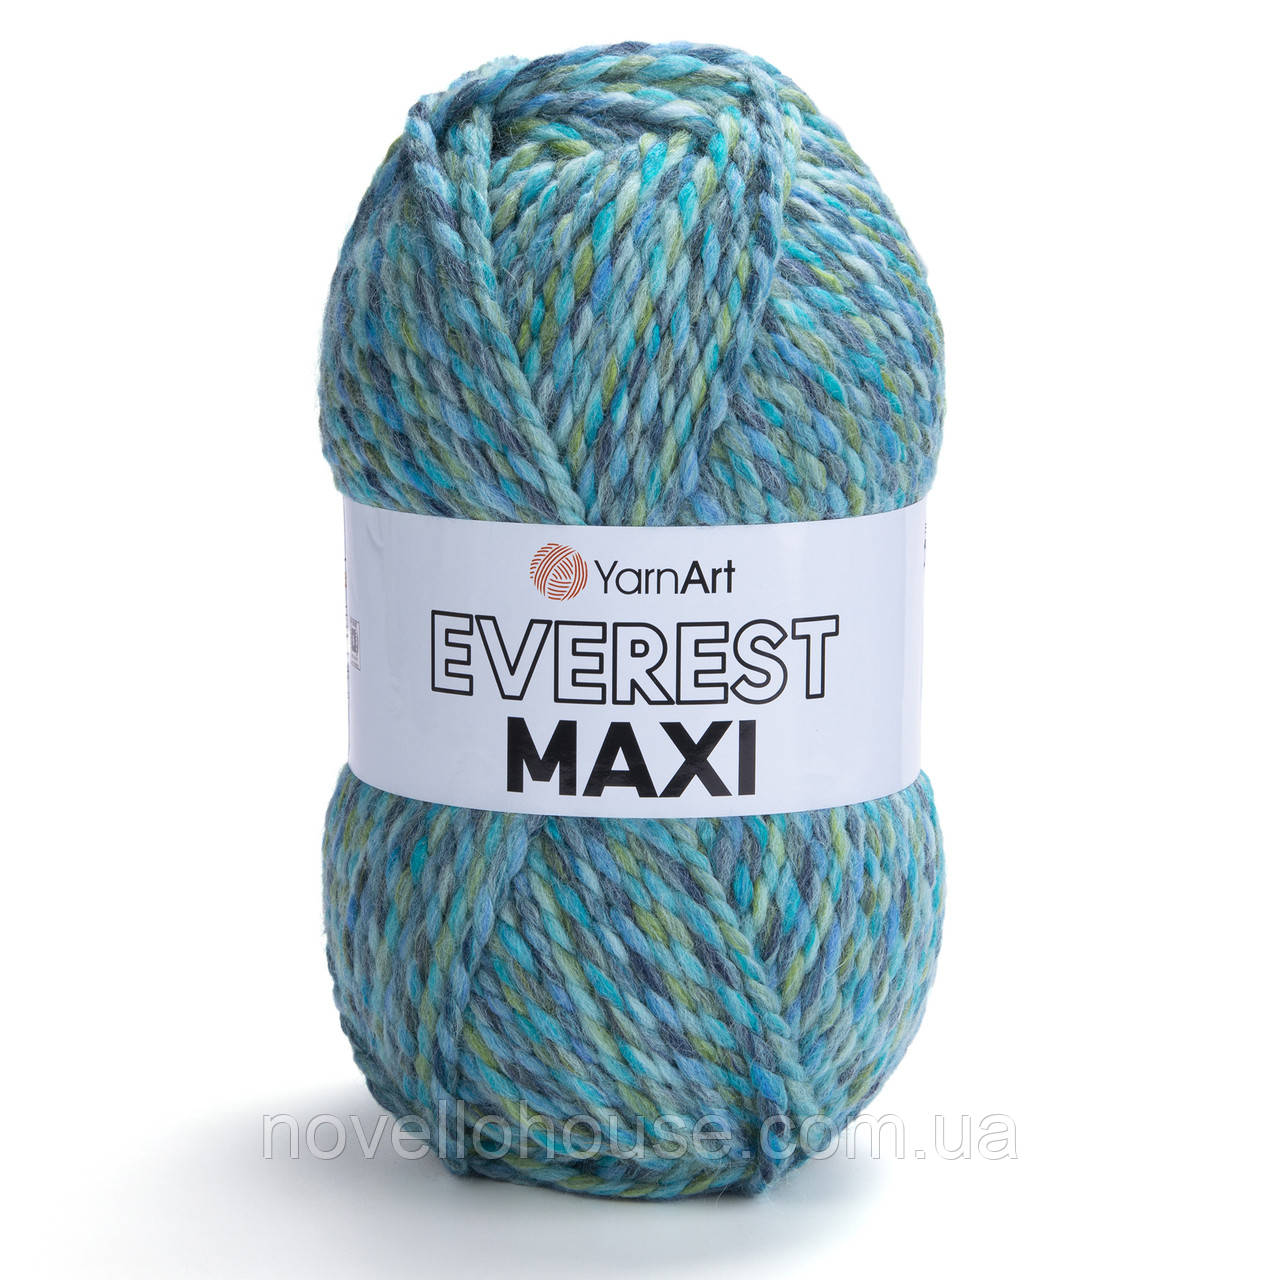 YarnArt EVEREST MAXI (Еверест Максі) № 8025 (Пряжа напіввовна, нитки для в'язання)